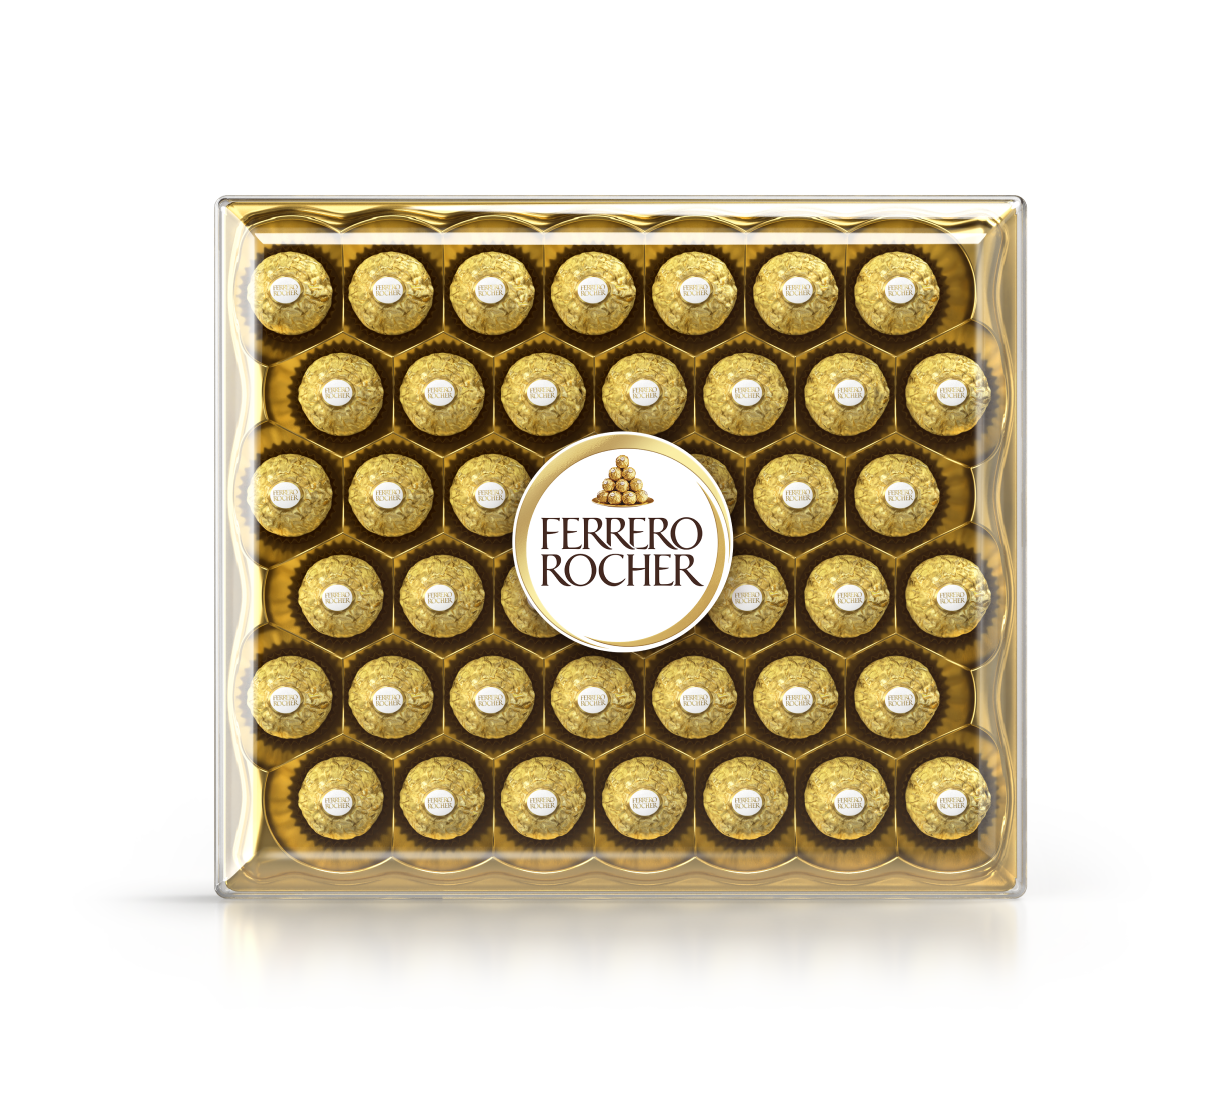 Buy Ferrero Rocher Chocolate 24 Pcs 300 Gm Box Online At Best Price of Rs  901.13 - bigbasket